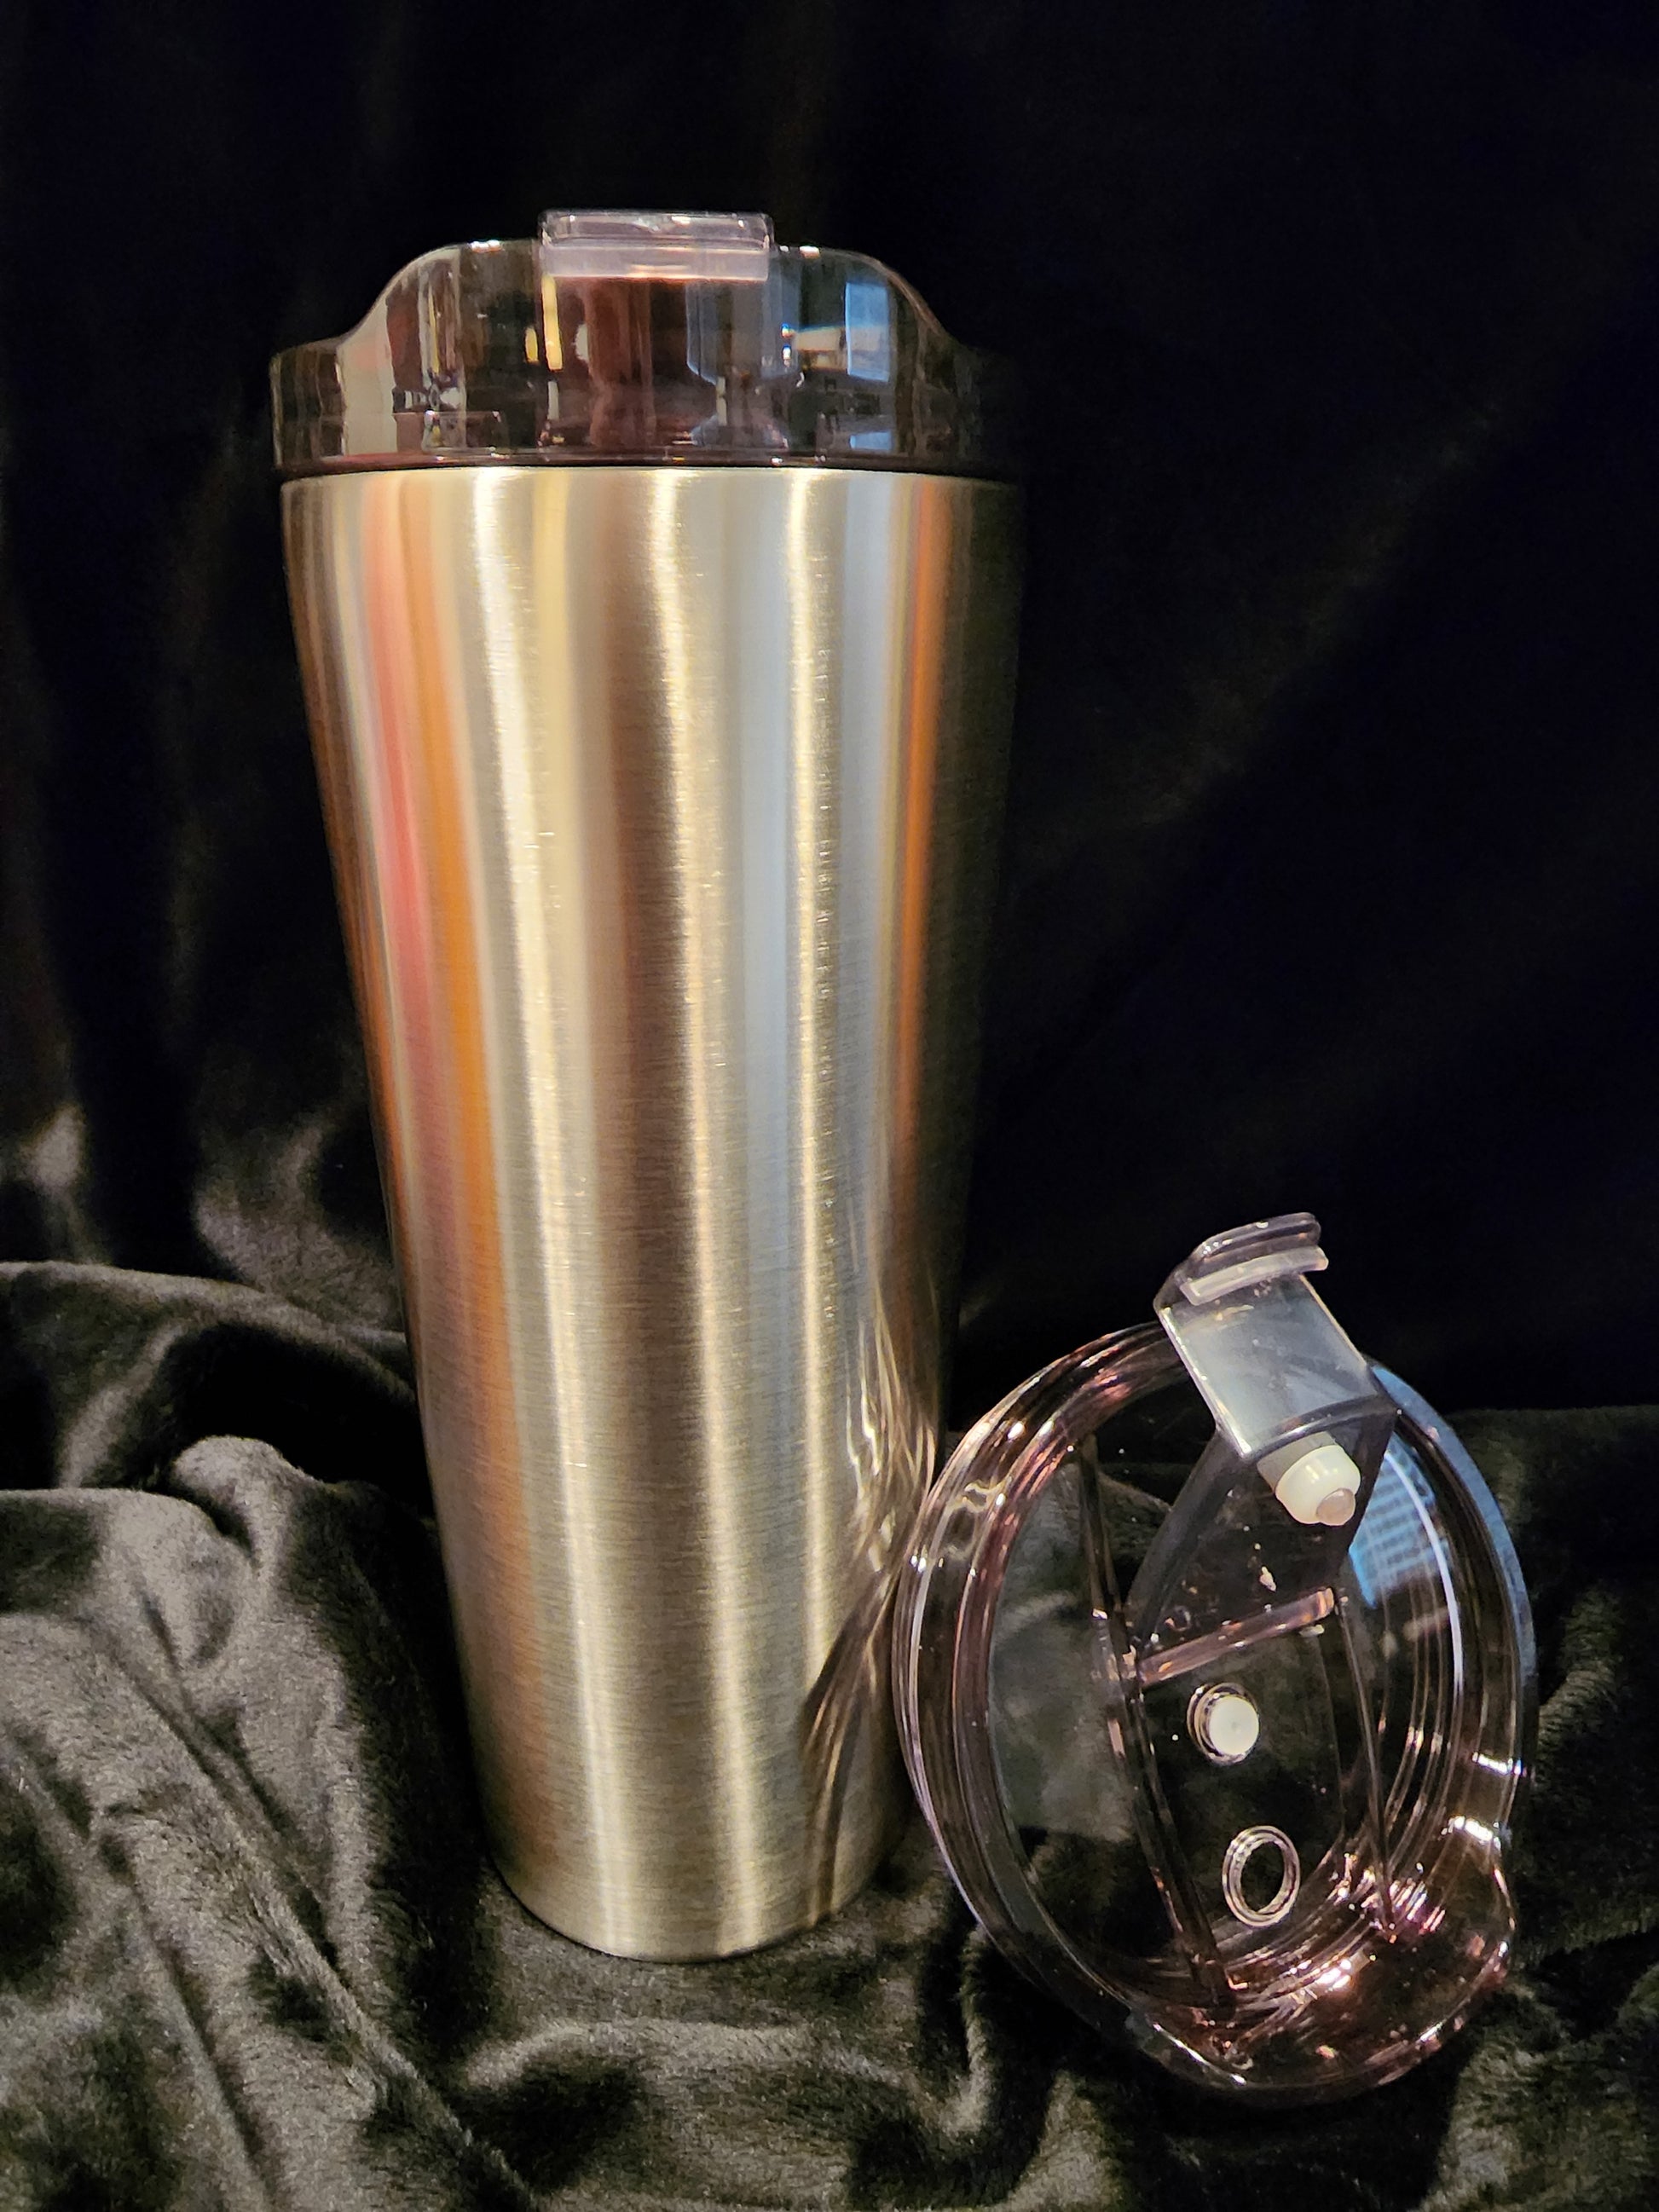 Tumbler Cup BULK ORDER – A.Nicole Designs